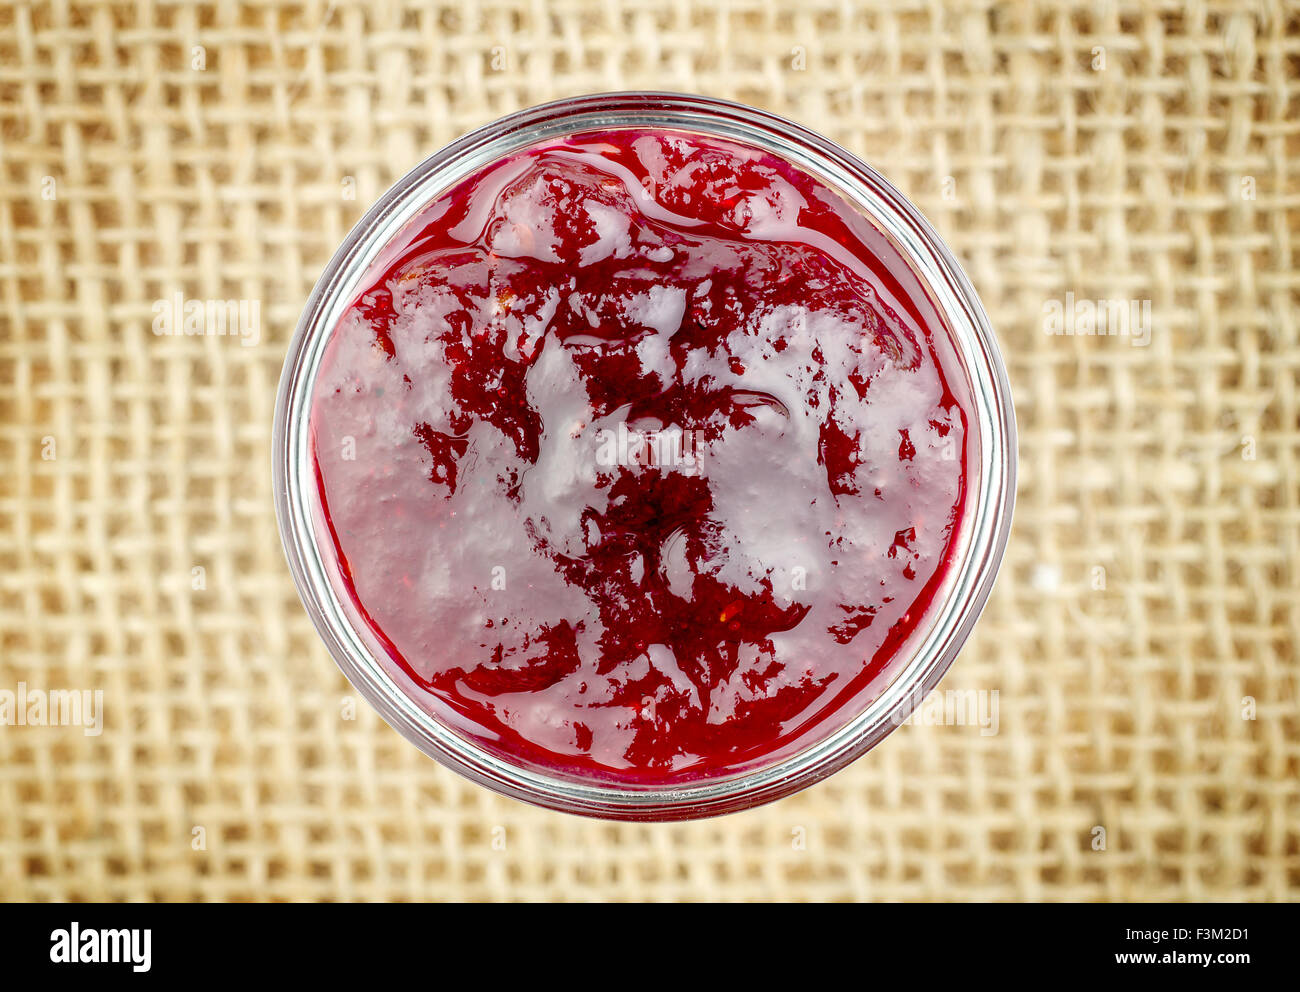 Aerial shot of strawberry jam against rustic burlap background Stock Photo